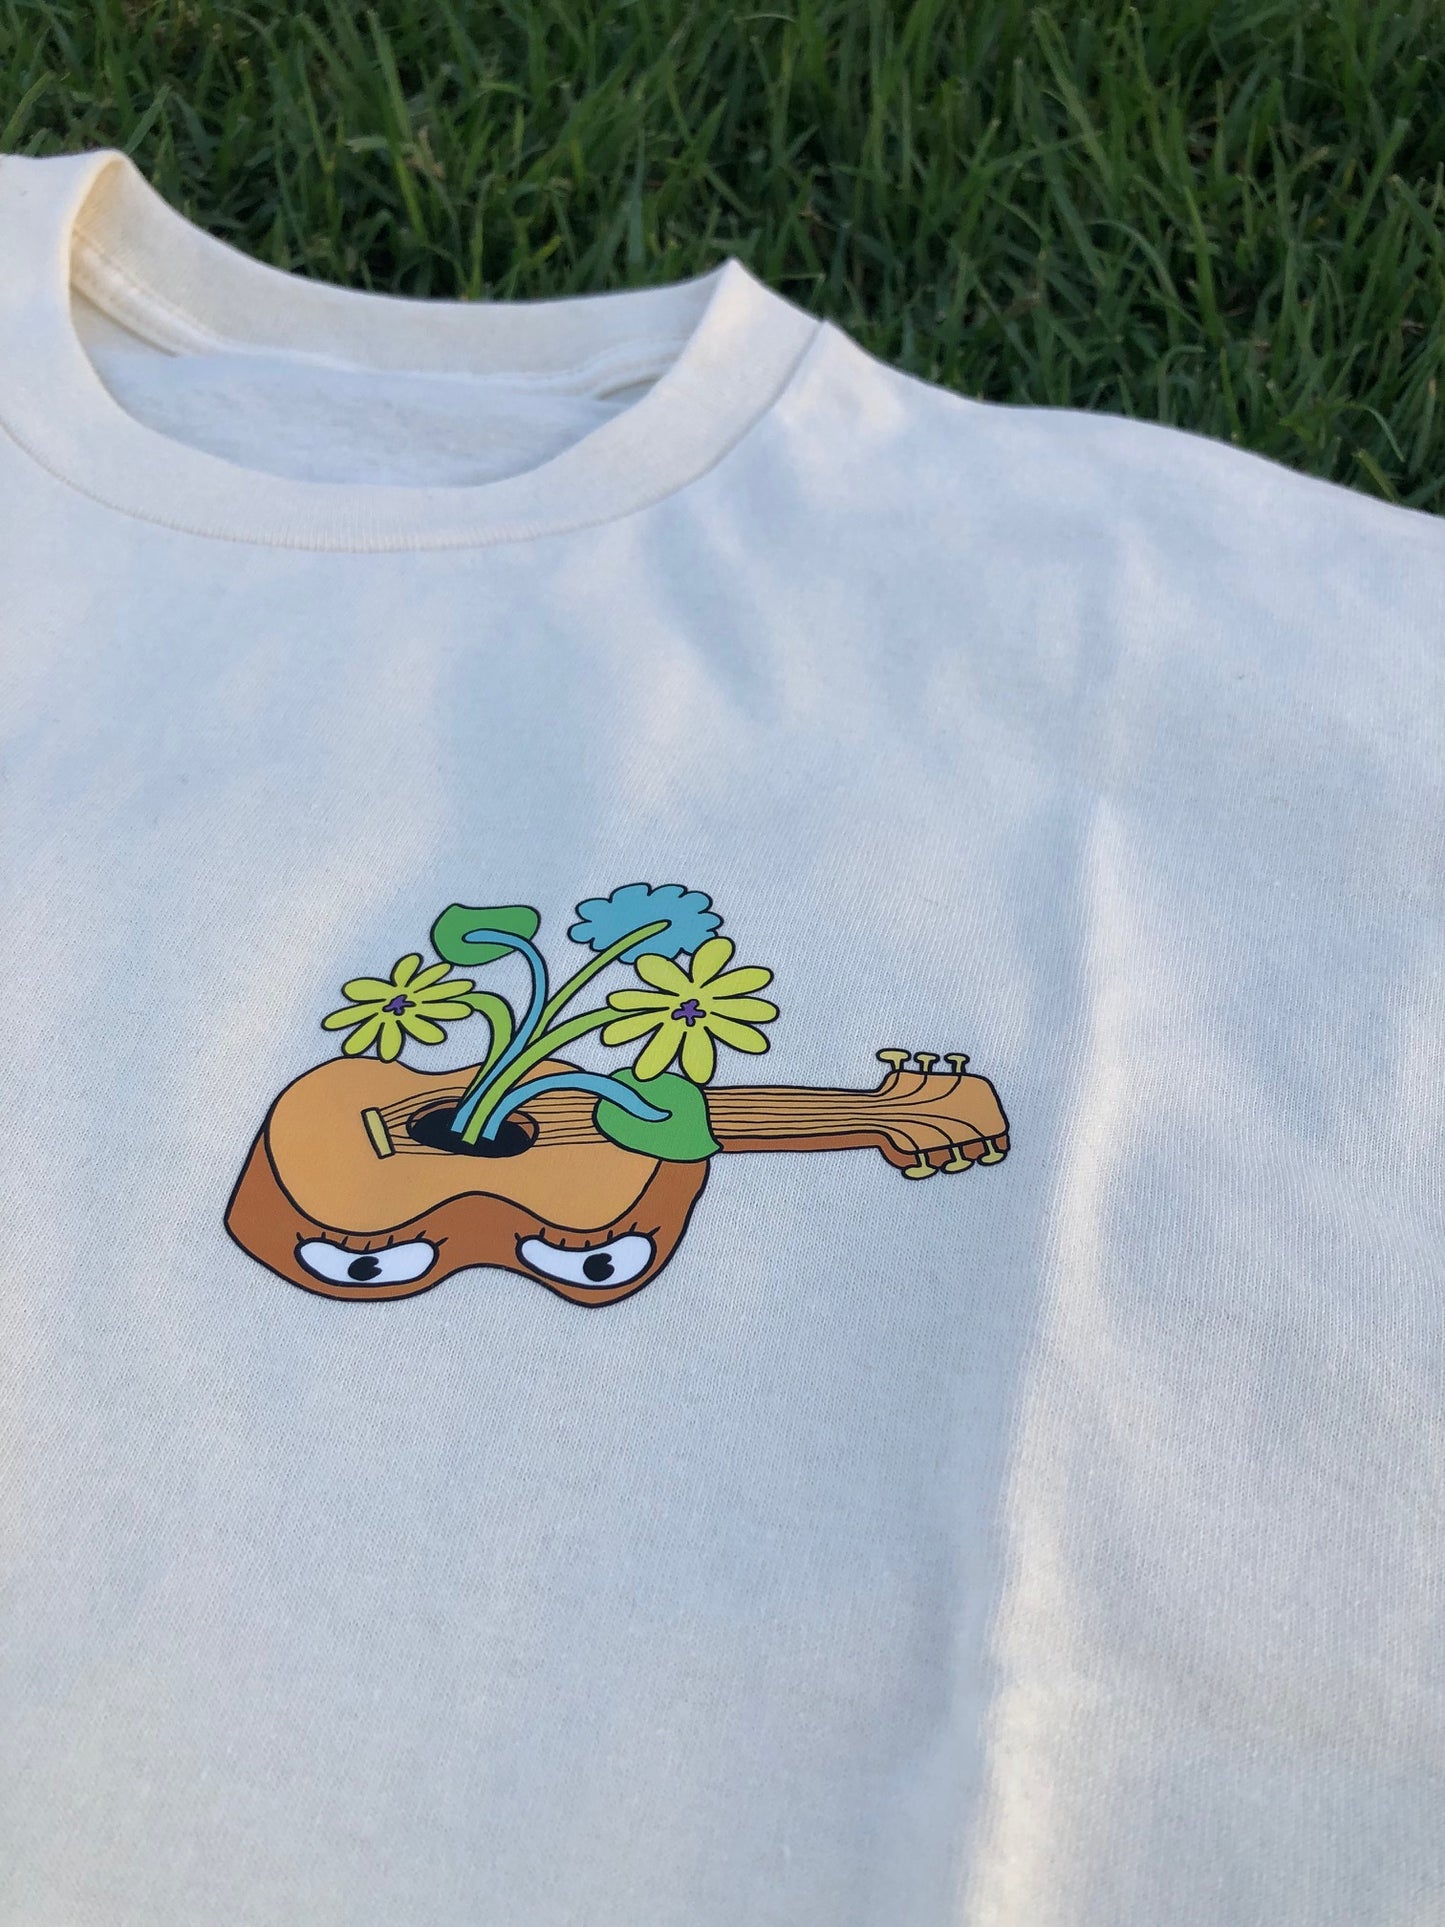 PlantSwap Shirts